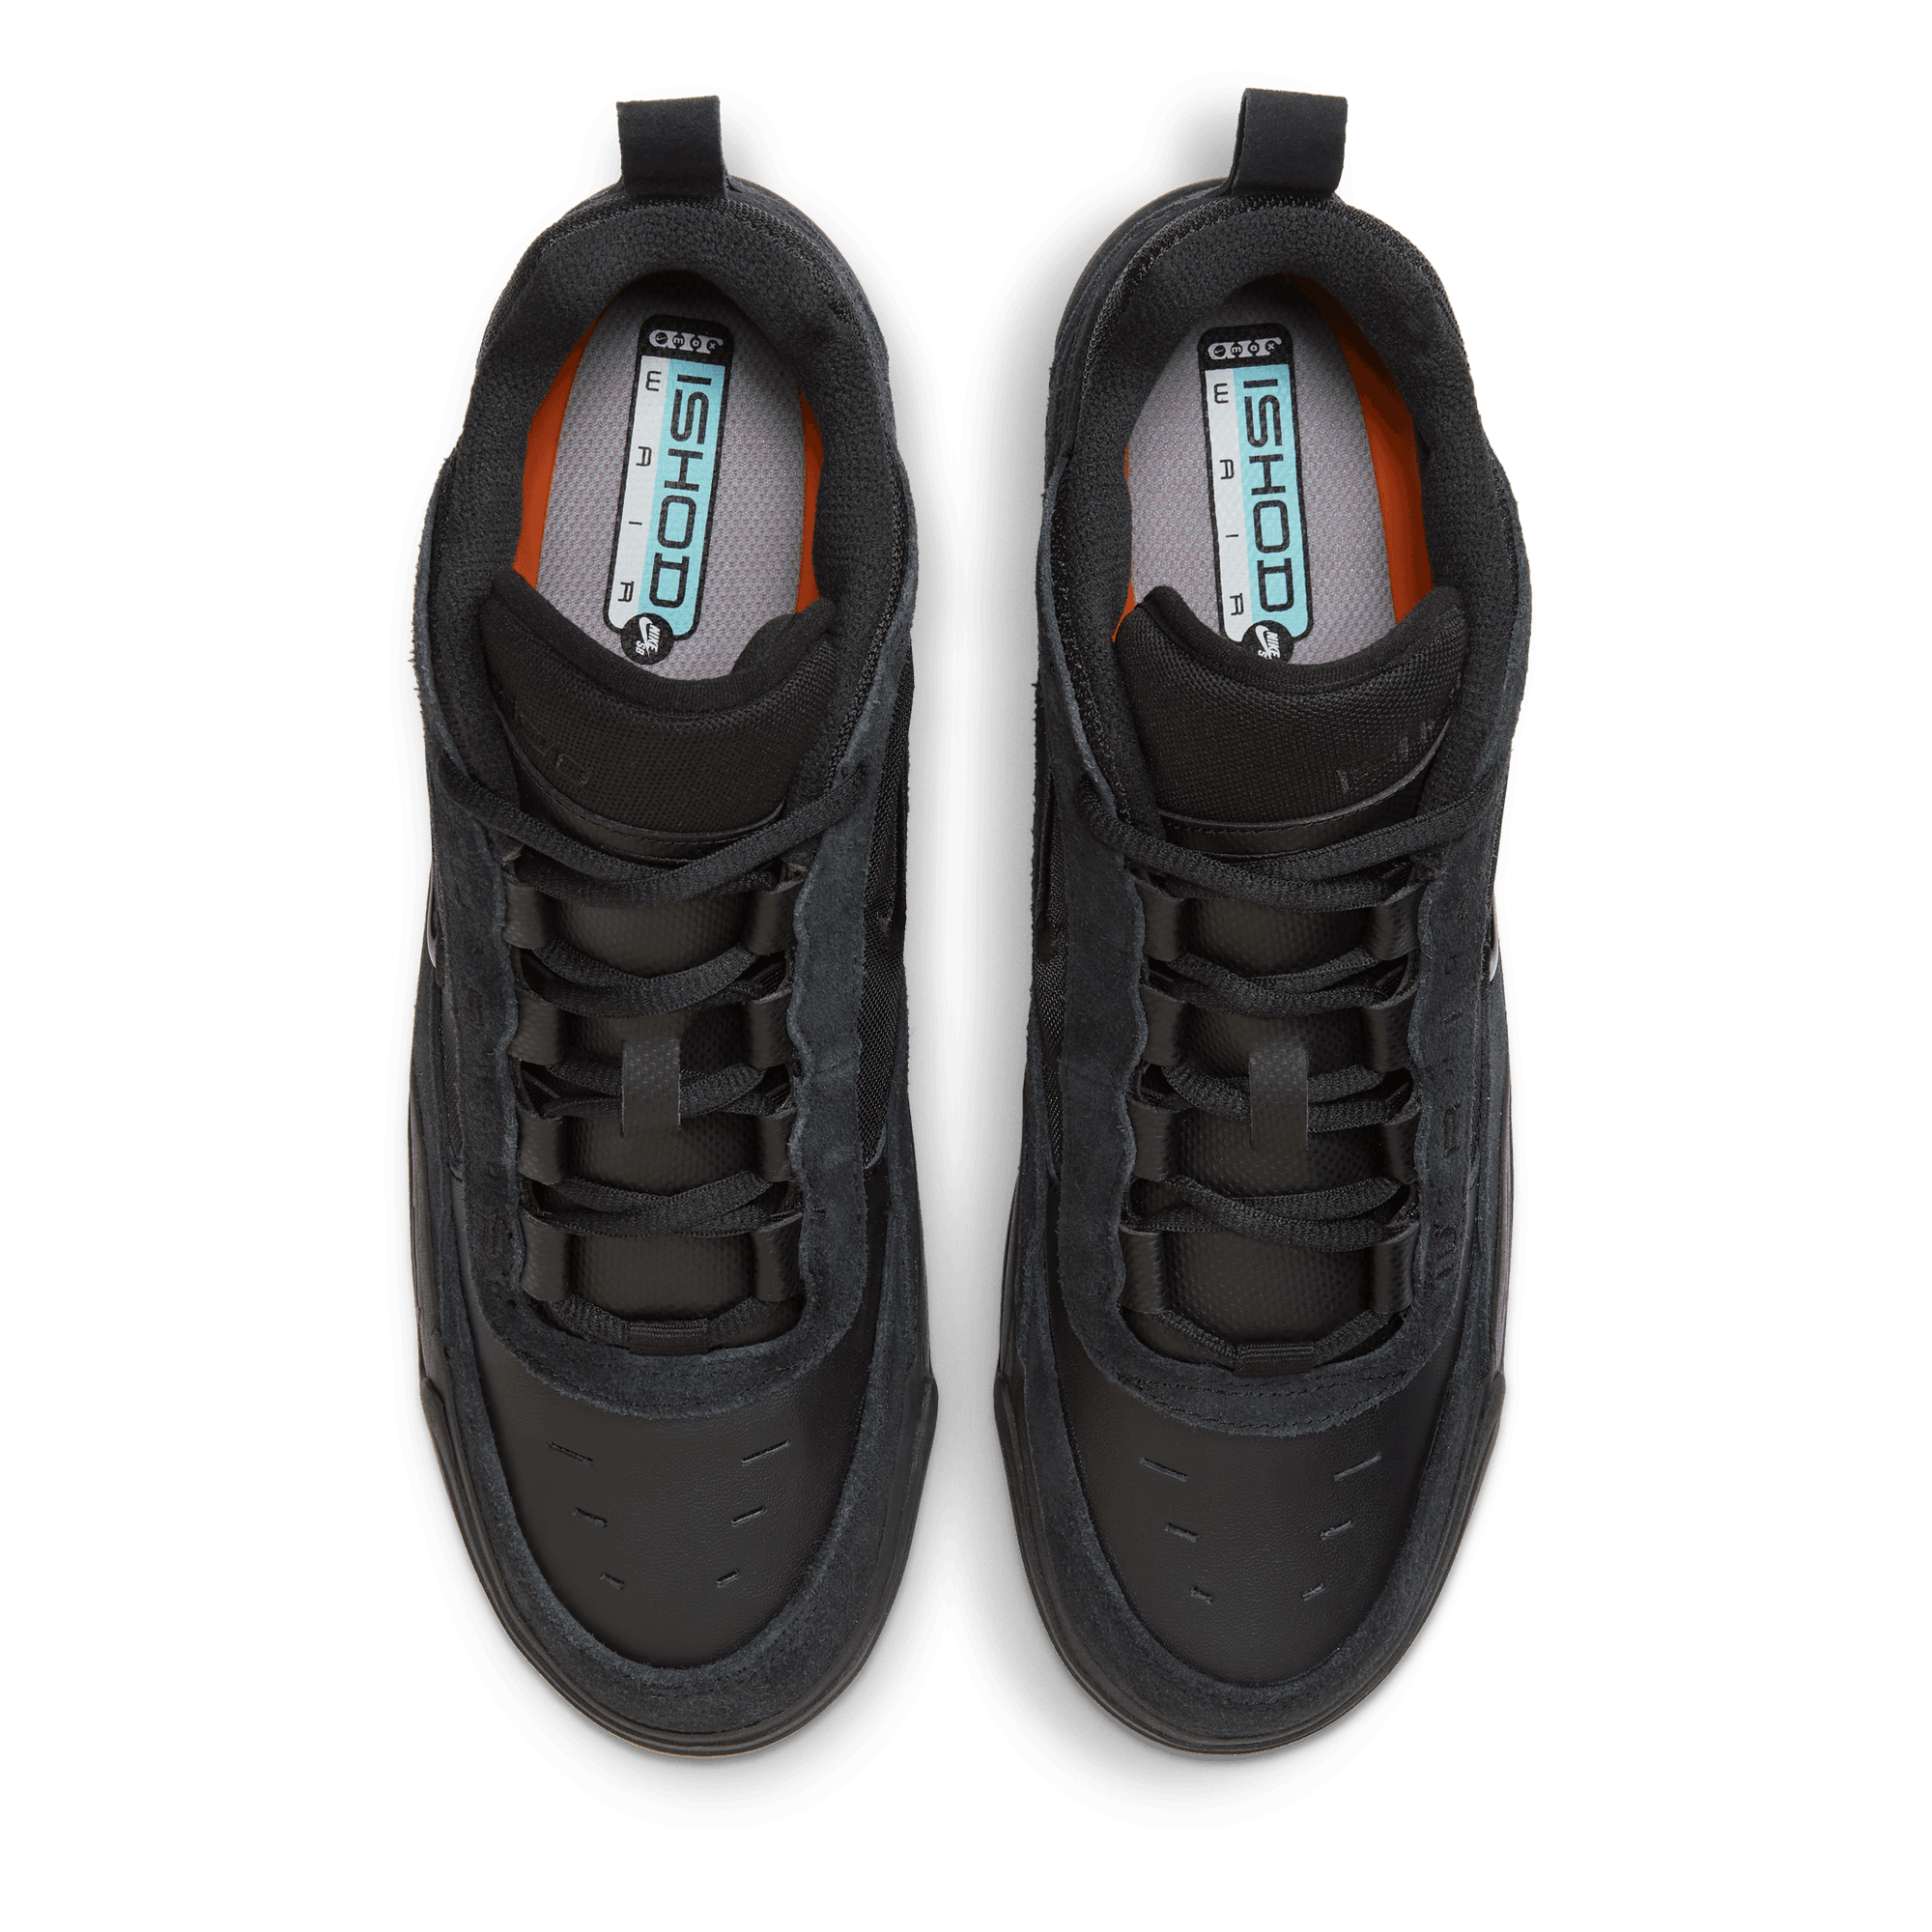 Black/Black Ishod Wair Max 2 Nike SB Shoe Top